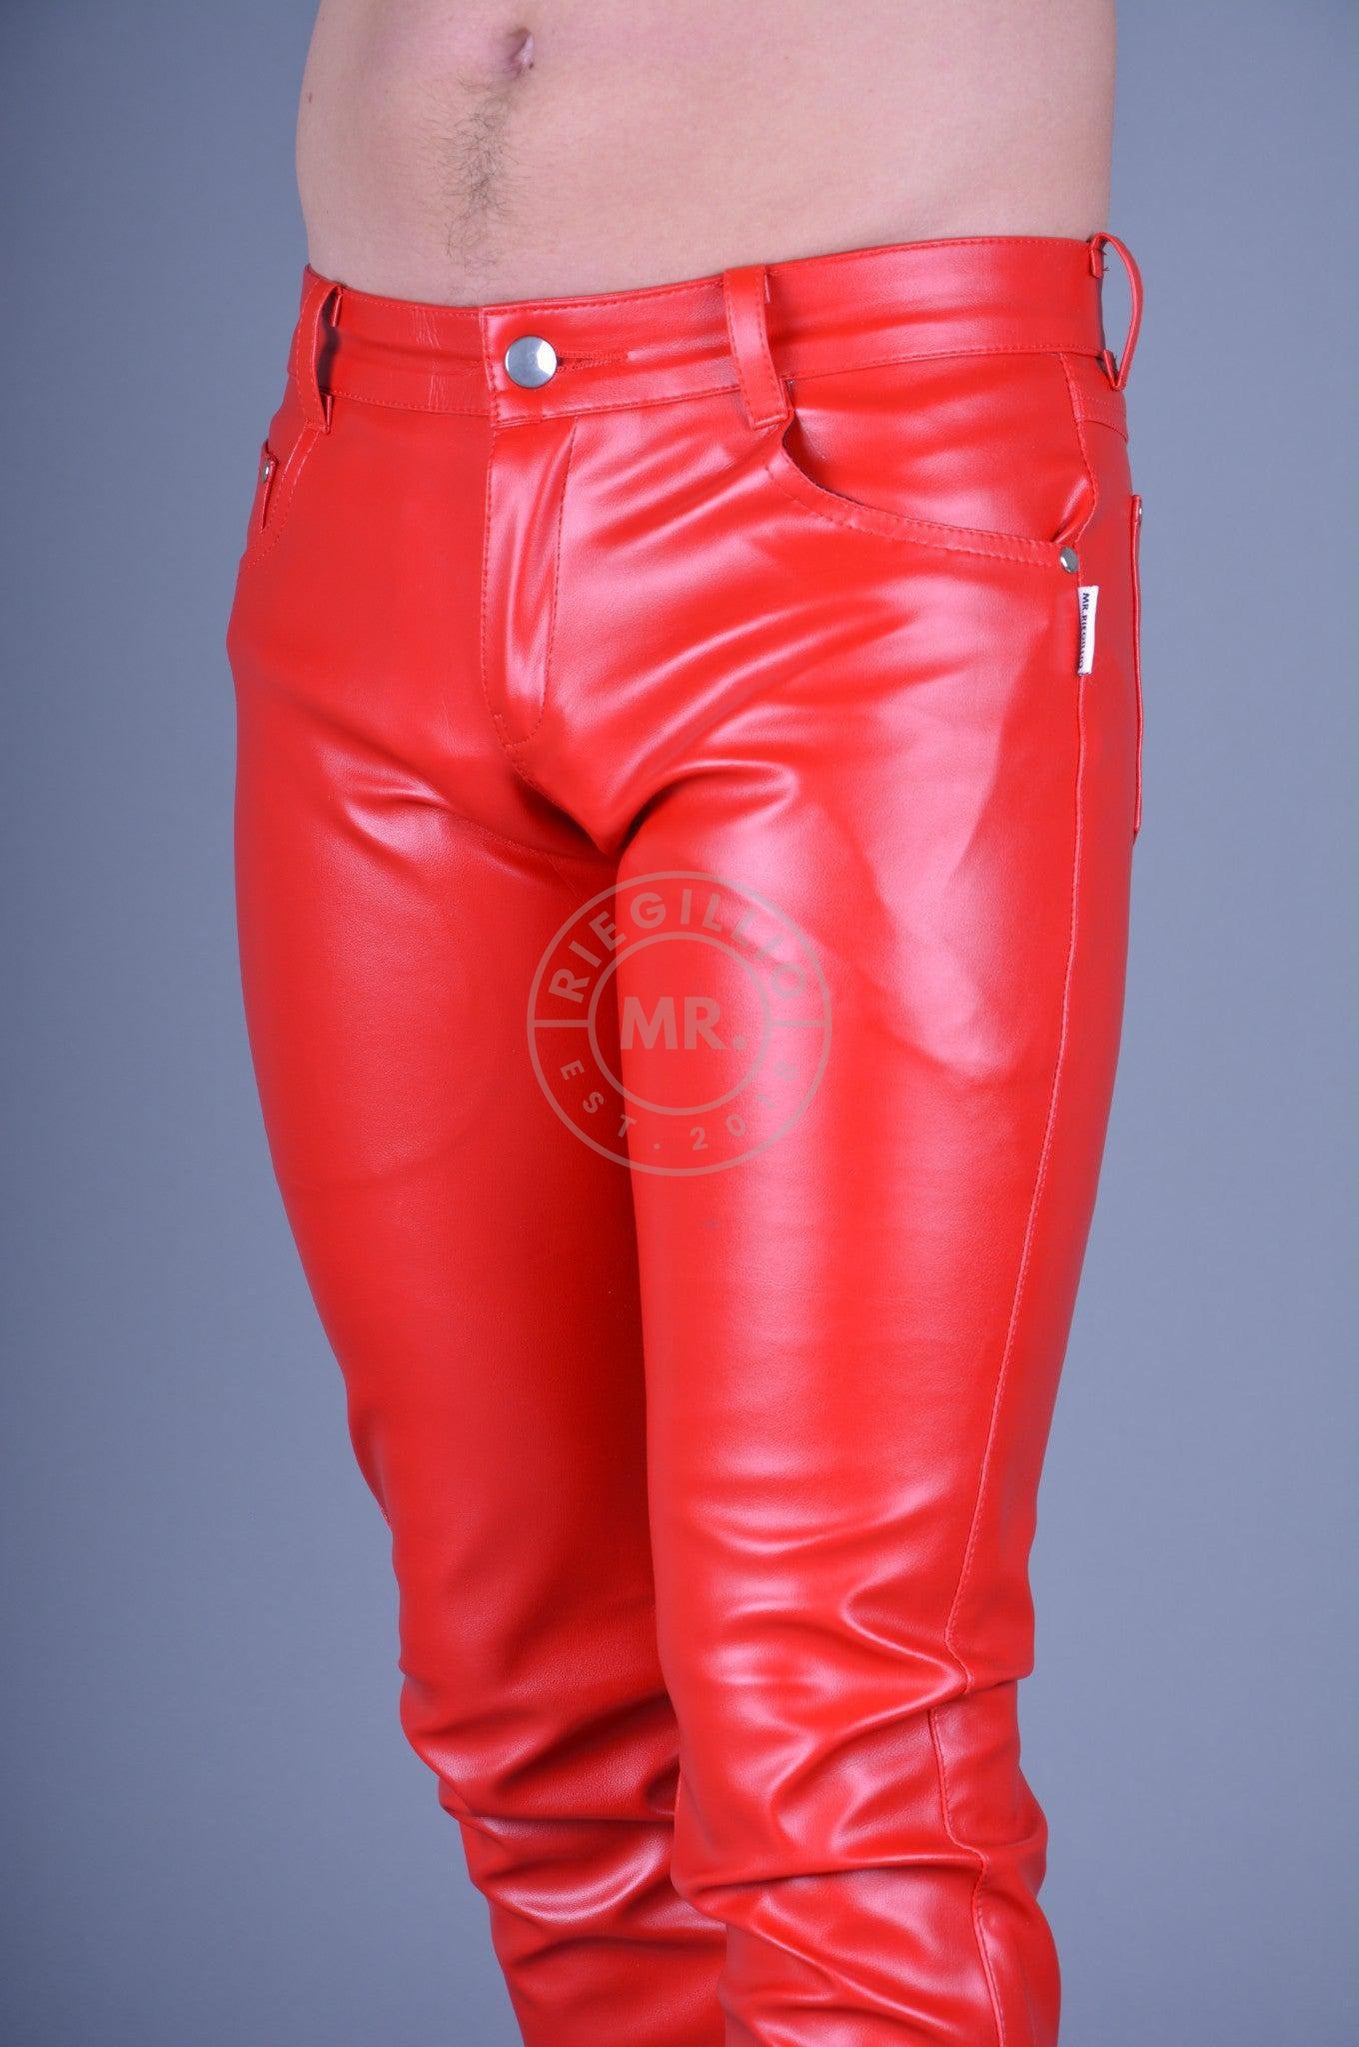 MR. 5-Pocket Pants Red at MR. Riegillio